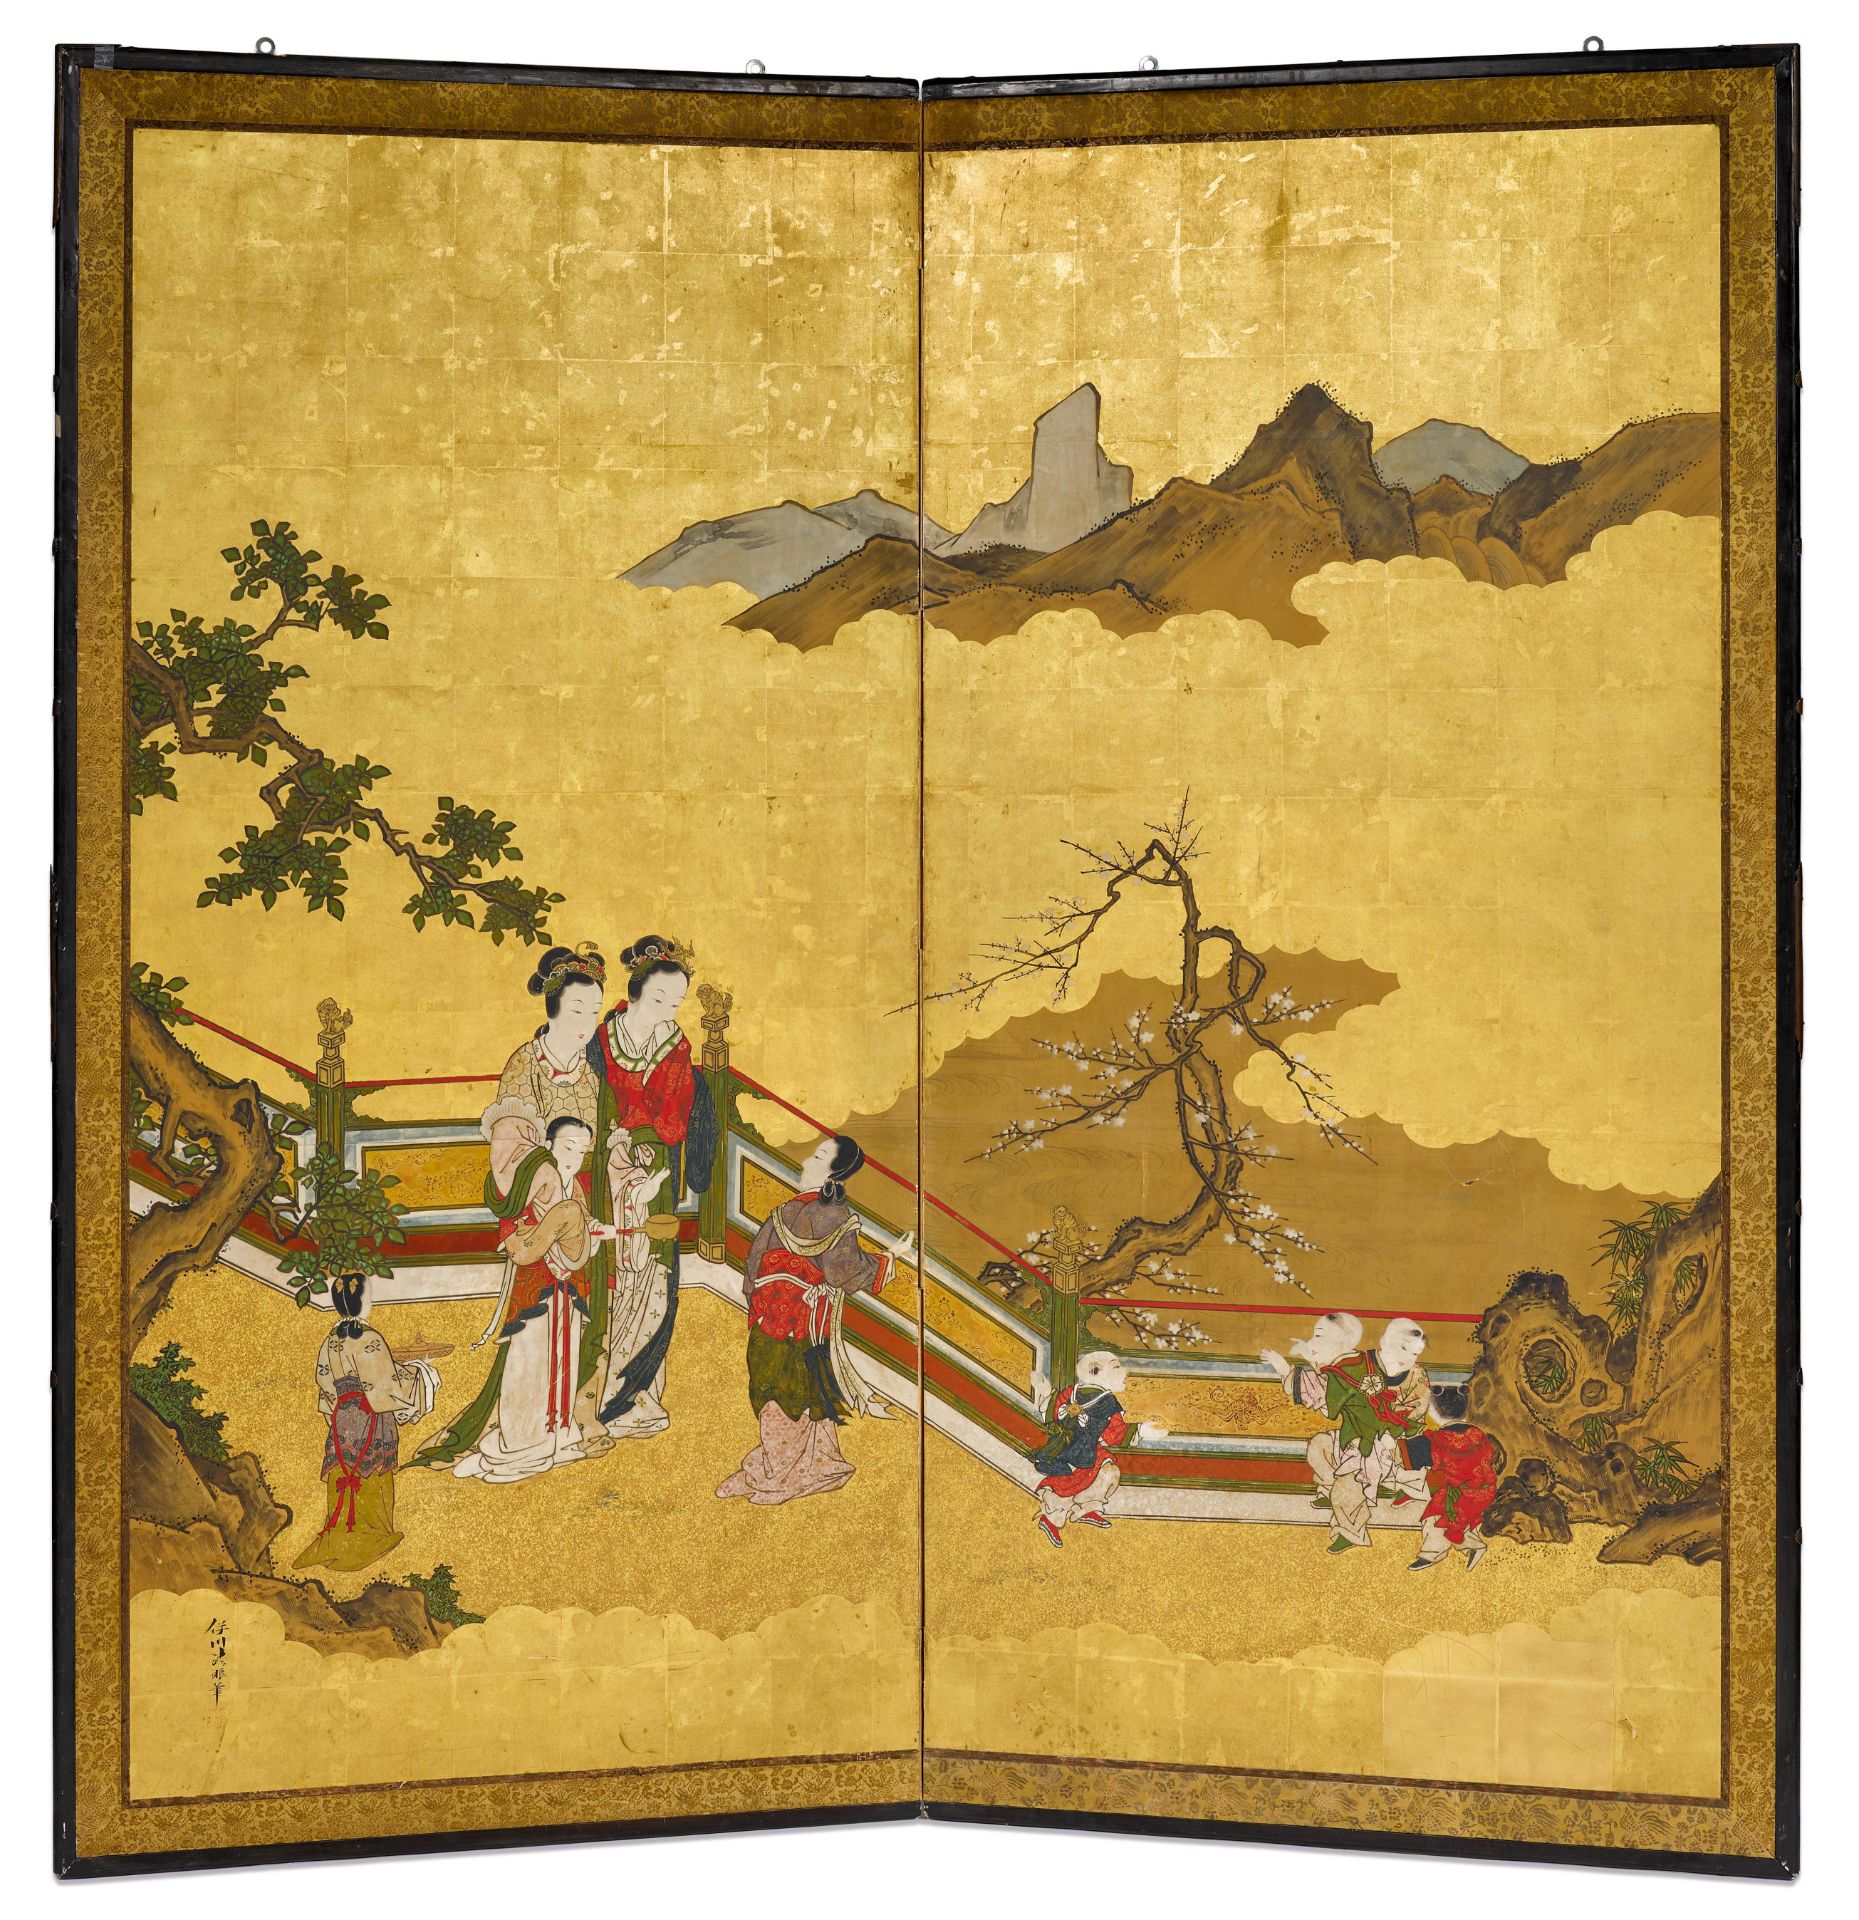 A TWO-PANEL FOLDING SCREEN (BYOBU) BY KANO ISEN'IN NAGANOBU (1775-1828).